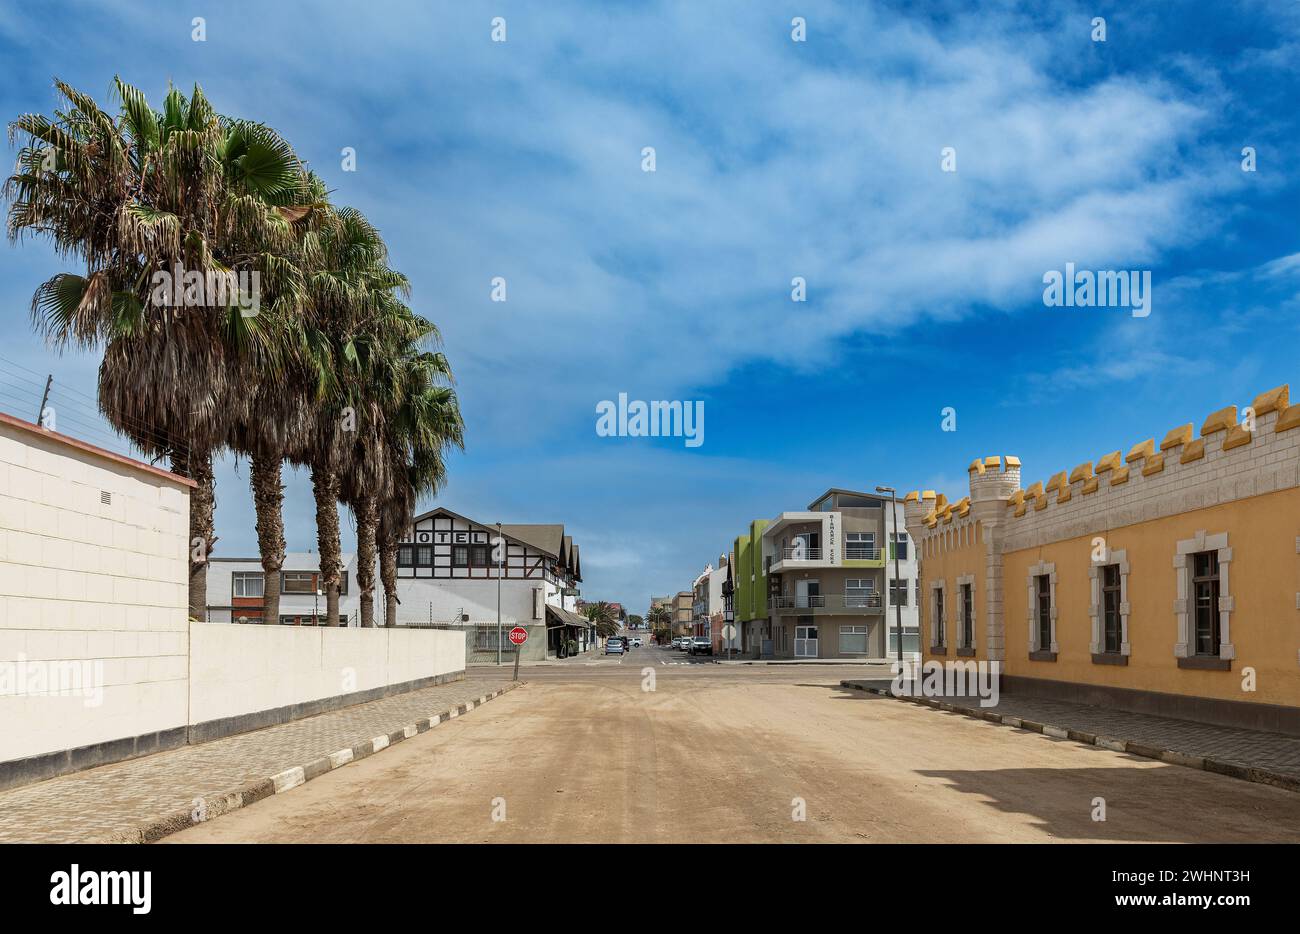 Street scene in the Namibian coastal town of Swakopmund Stock Photo